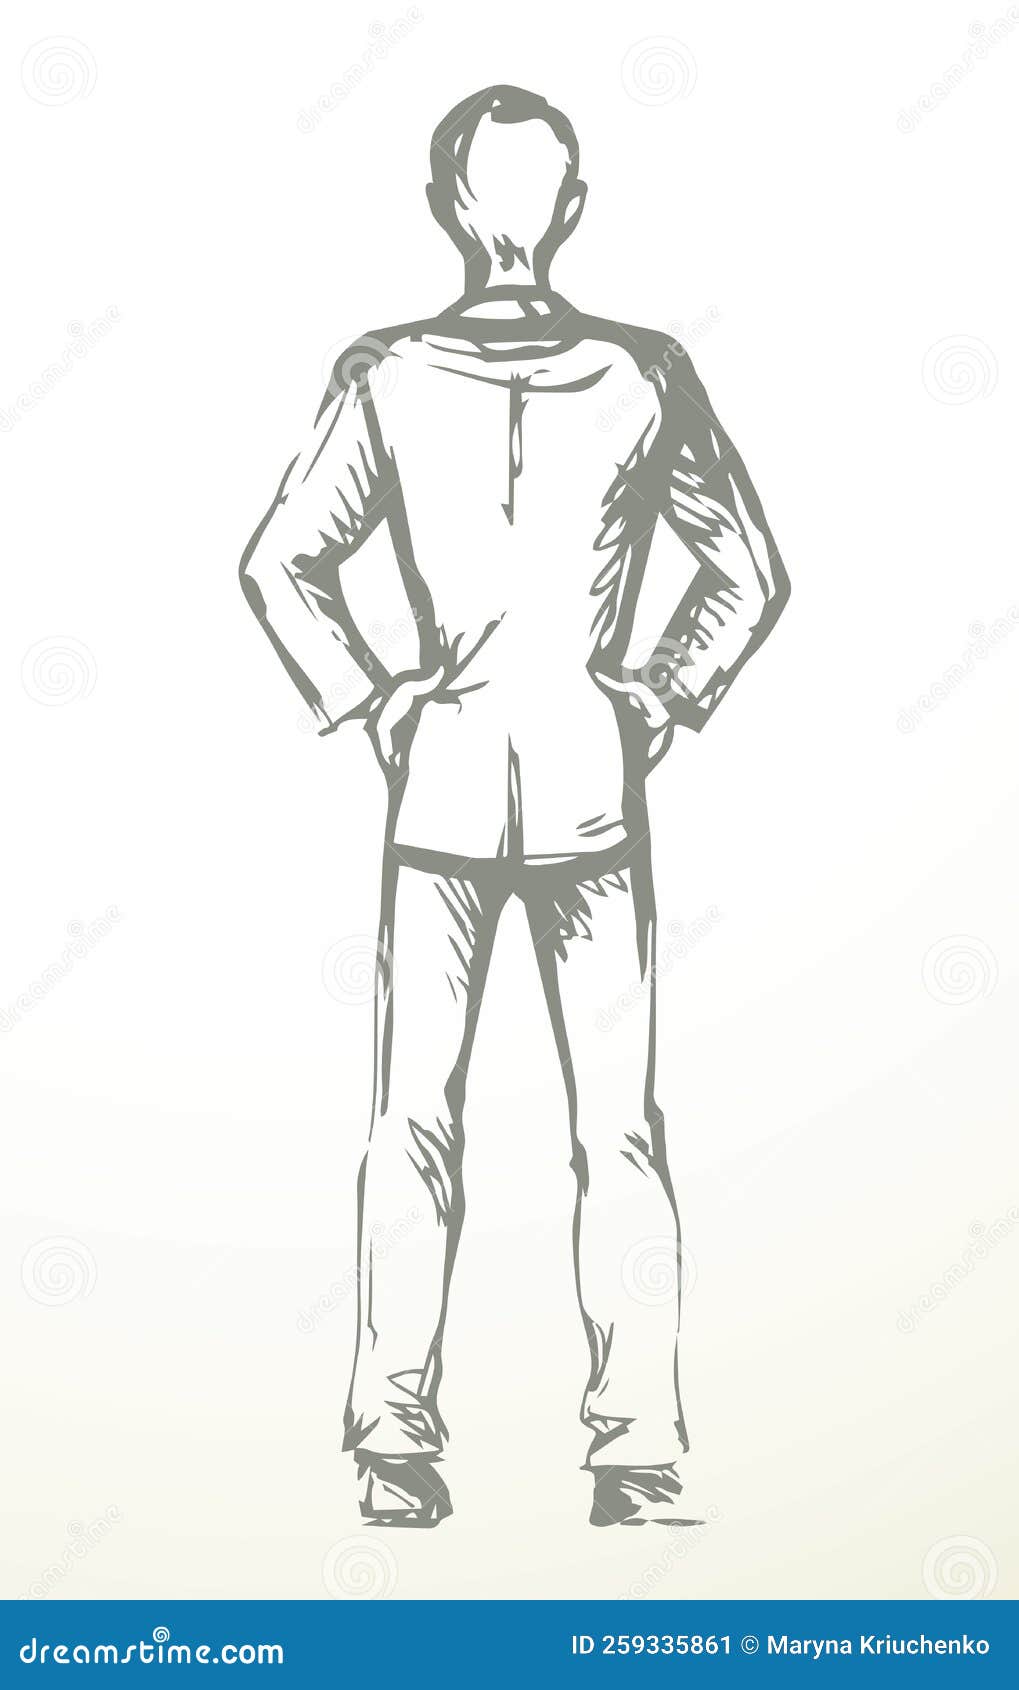 ArtStation - Stylized Cool Character Sketch - Male